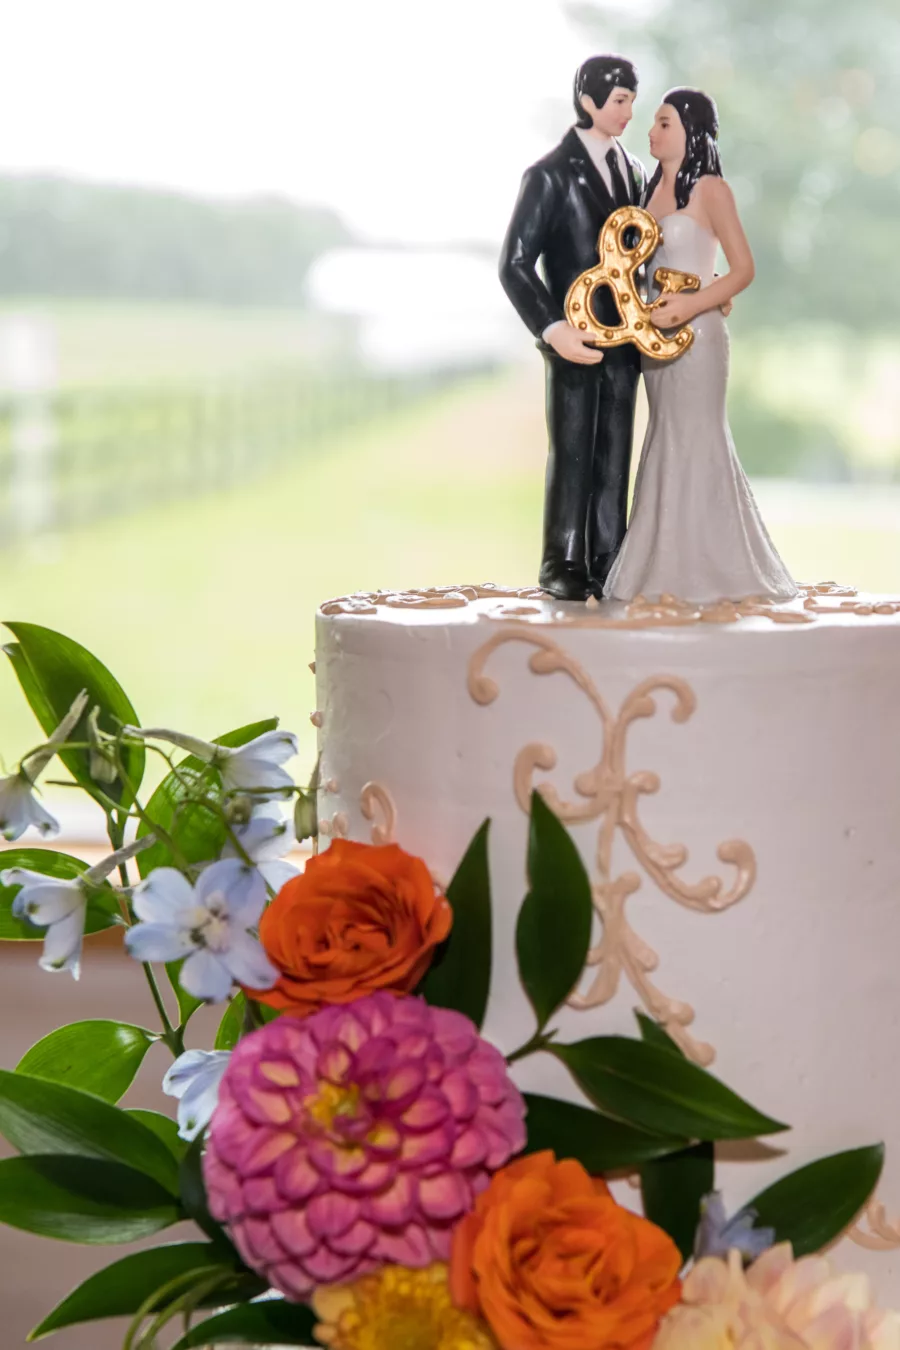 Rustic People Wedding Cake Topper Ideas